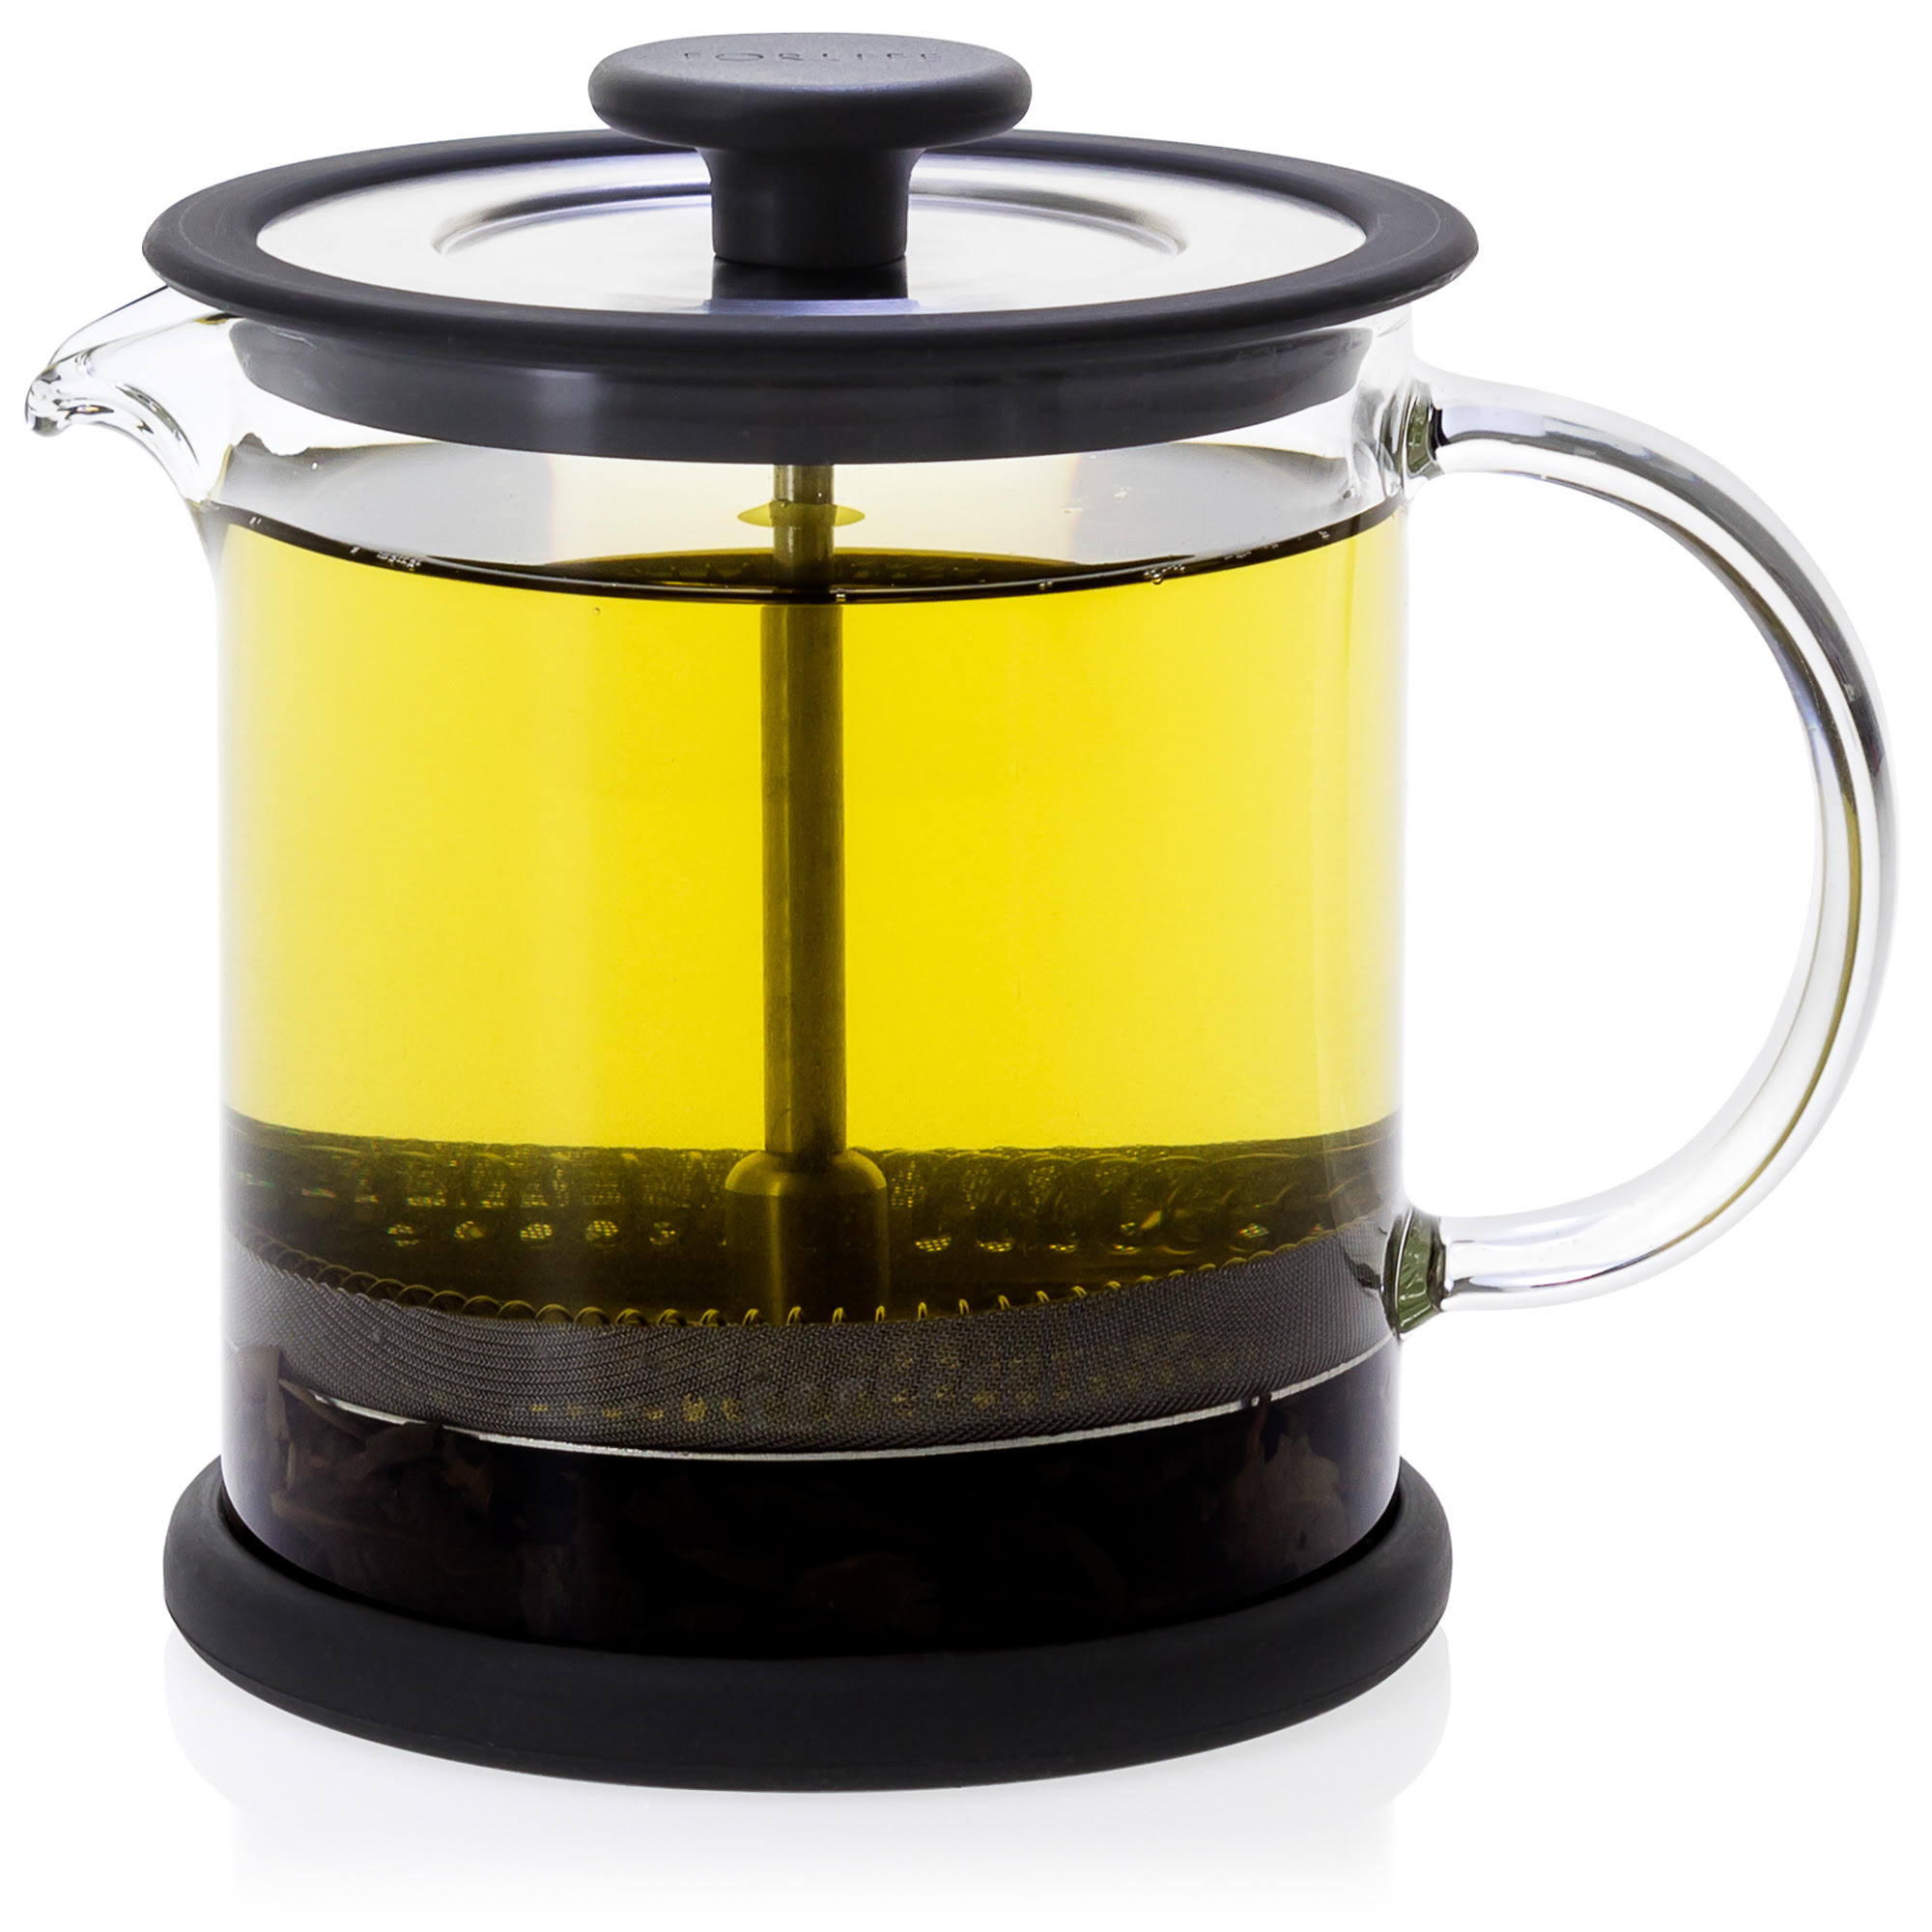 Cafe - Glass Tea Press - The Tea Smith